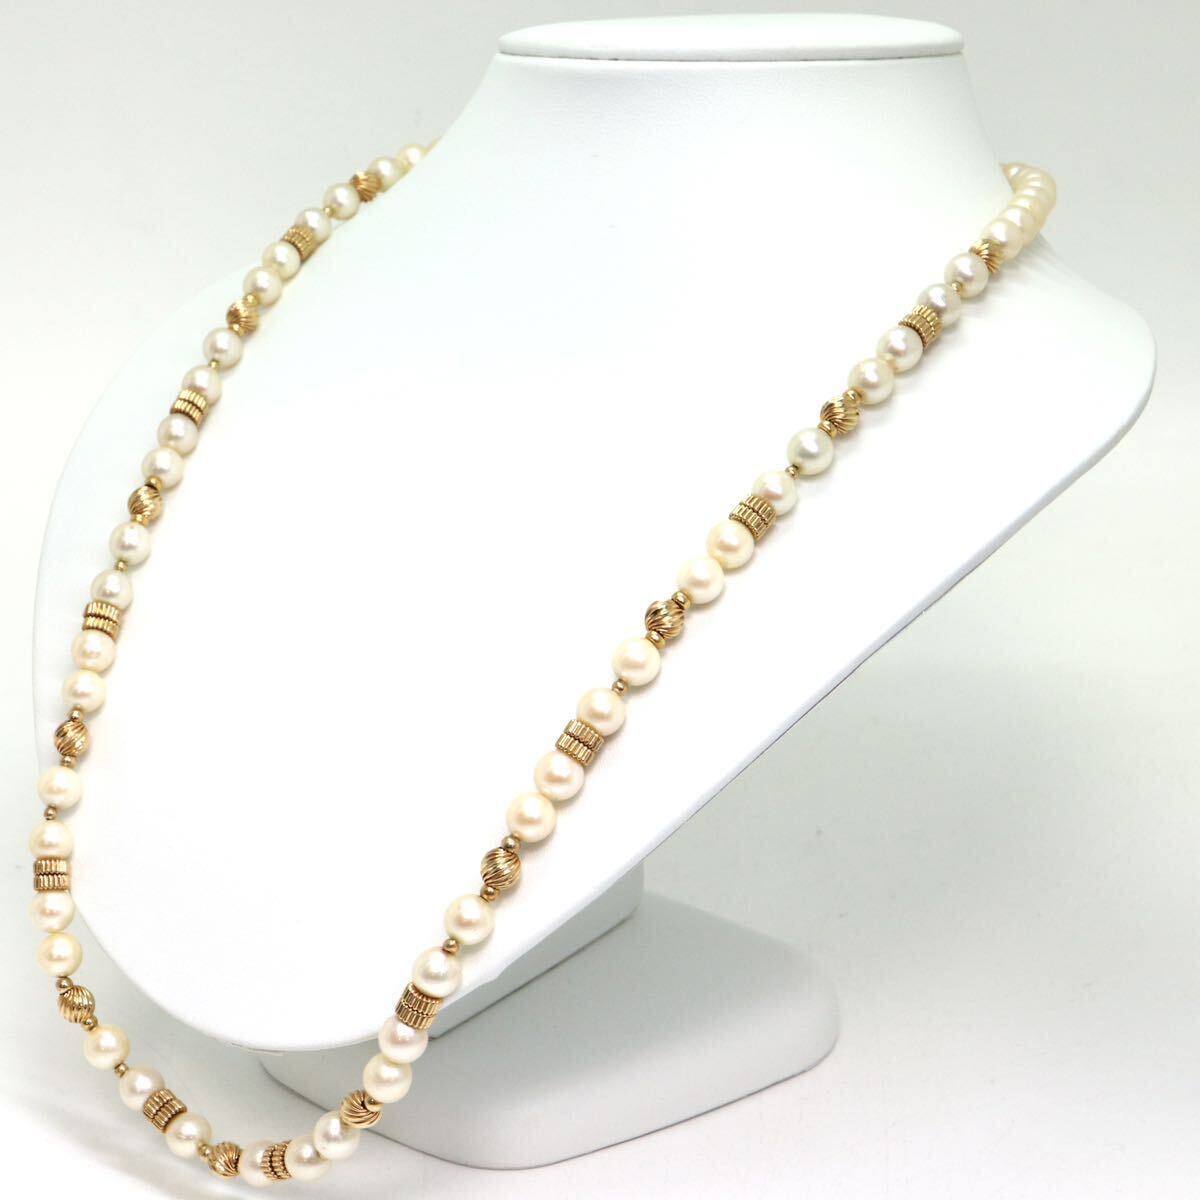 《K14 アコヤ本真珠ネックレス》M 40.3g 約7.0-7.5mm珠 約65cm pearl necklace ジュエリー jewelry EB3/EB3の画像3